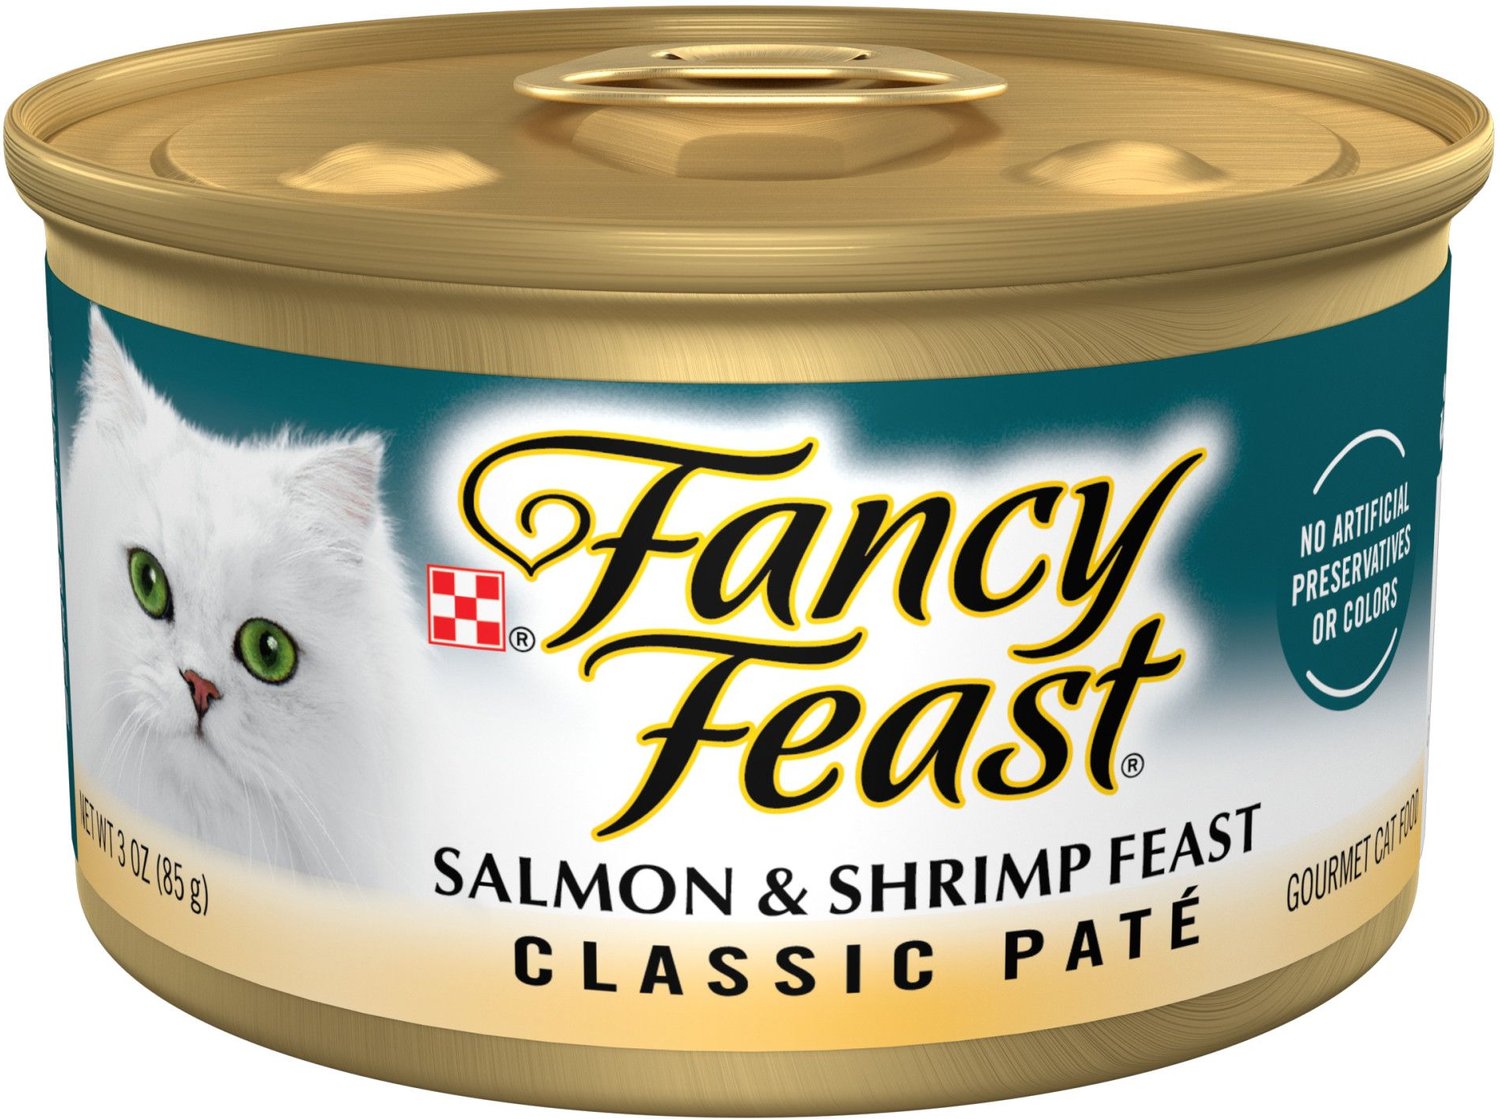 Fancy Feast Classic Salmon & Shrimp Feast Canned Cat Food, 3oz, case